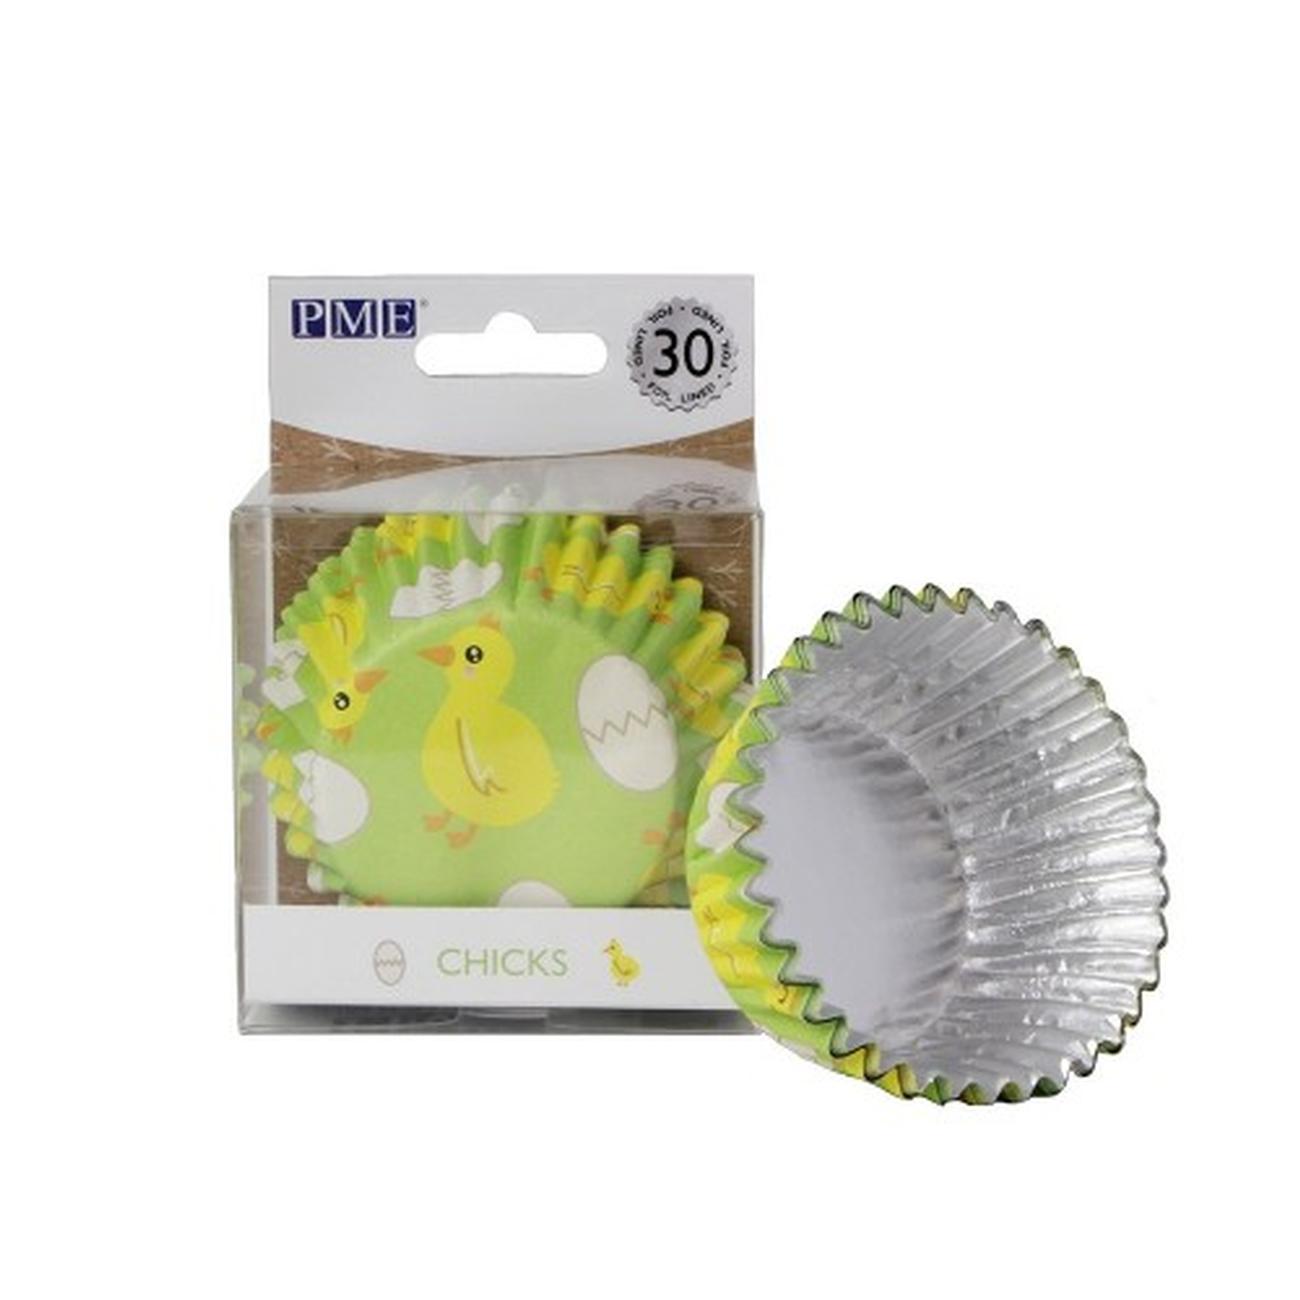 pme-30-foil-caking-cases-Easter-chicks - PME 30 Easter Chicks Foil Cupcake Cases